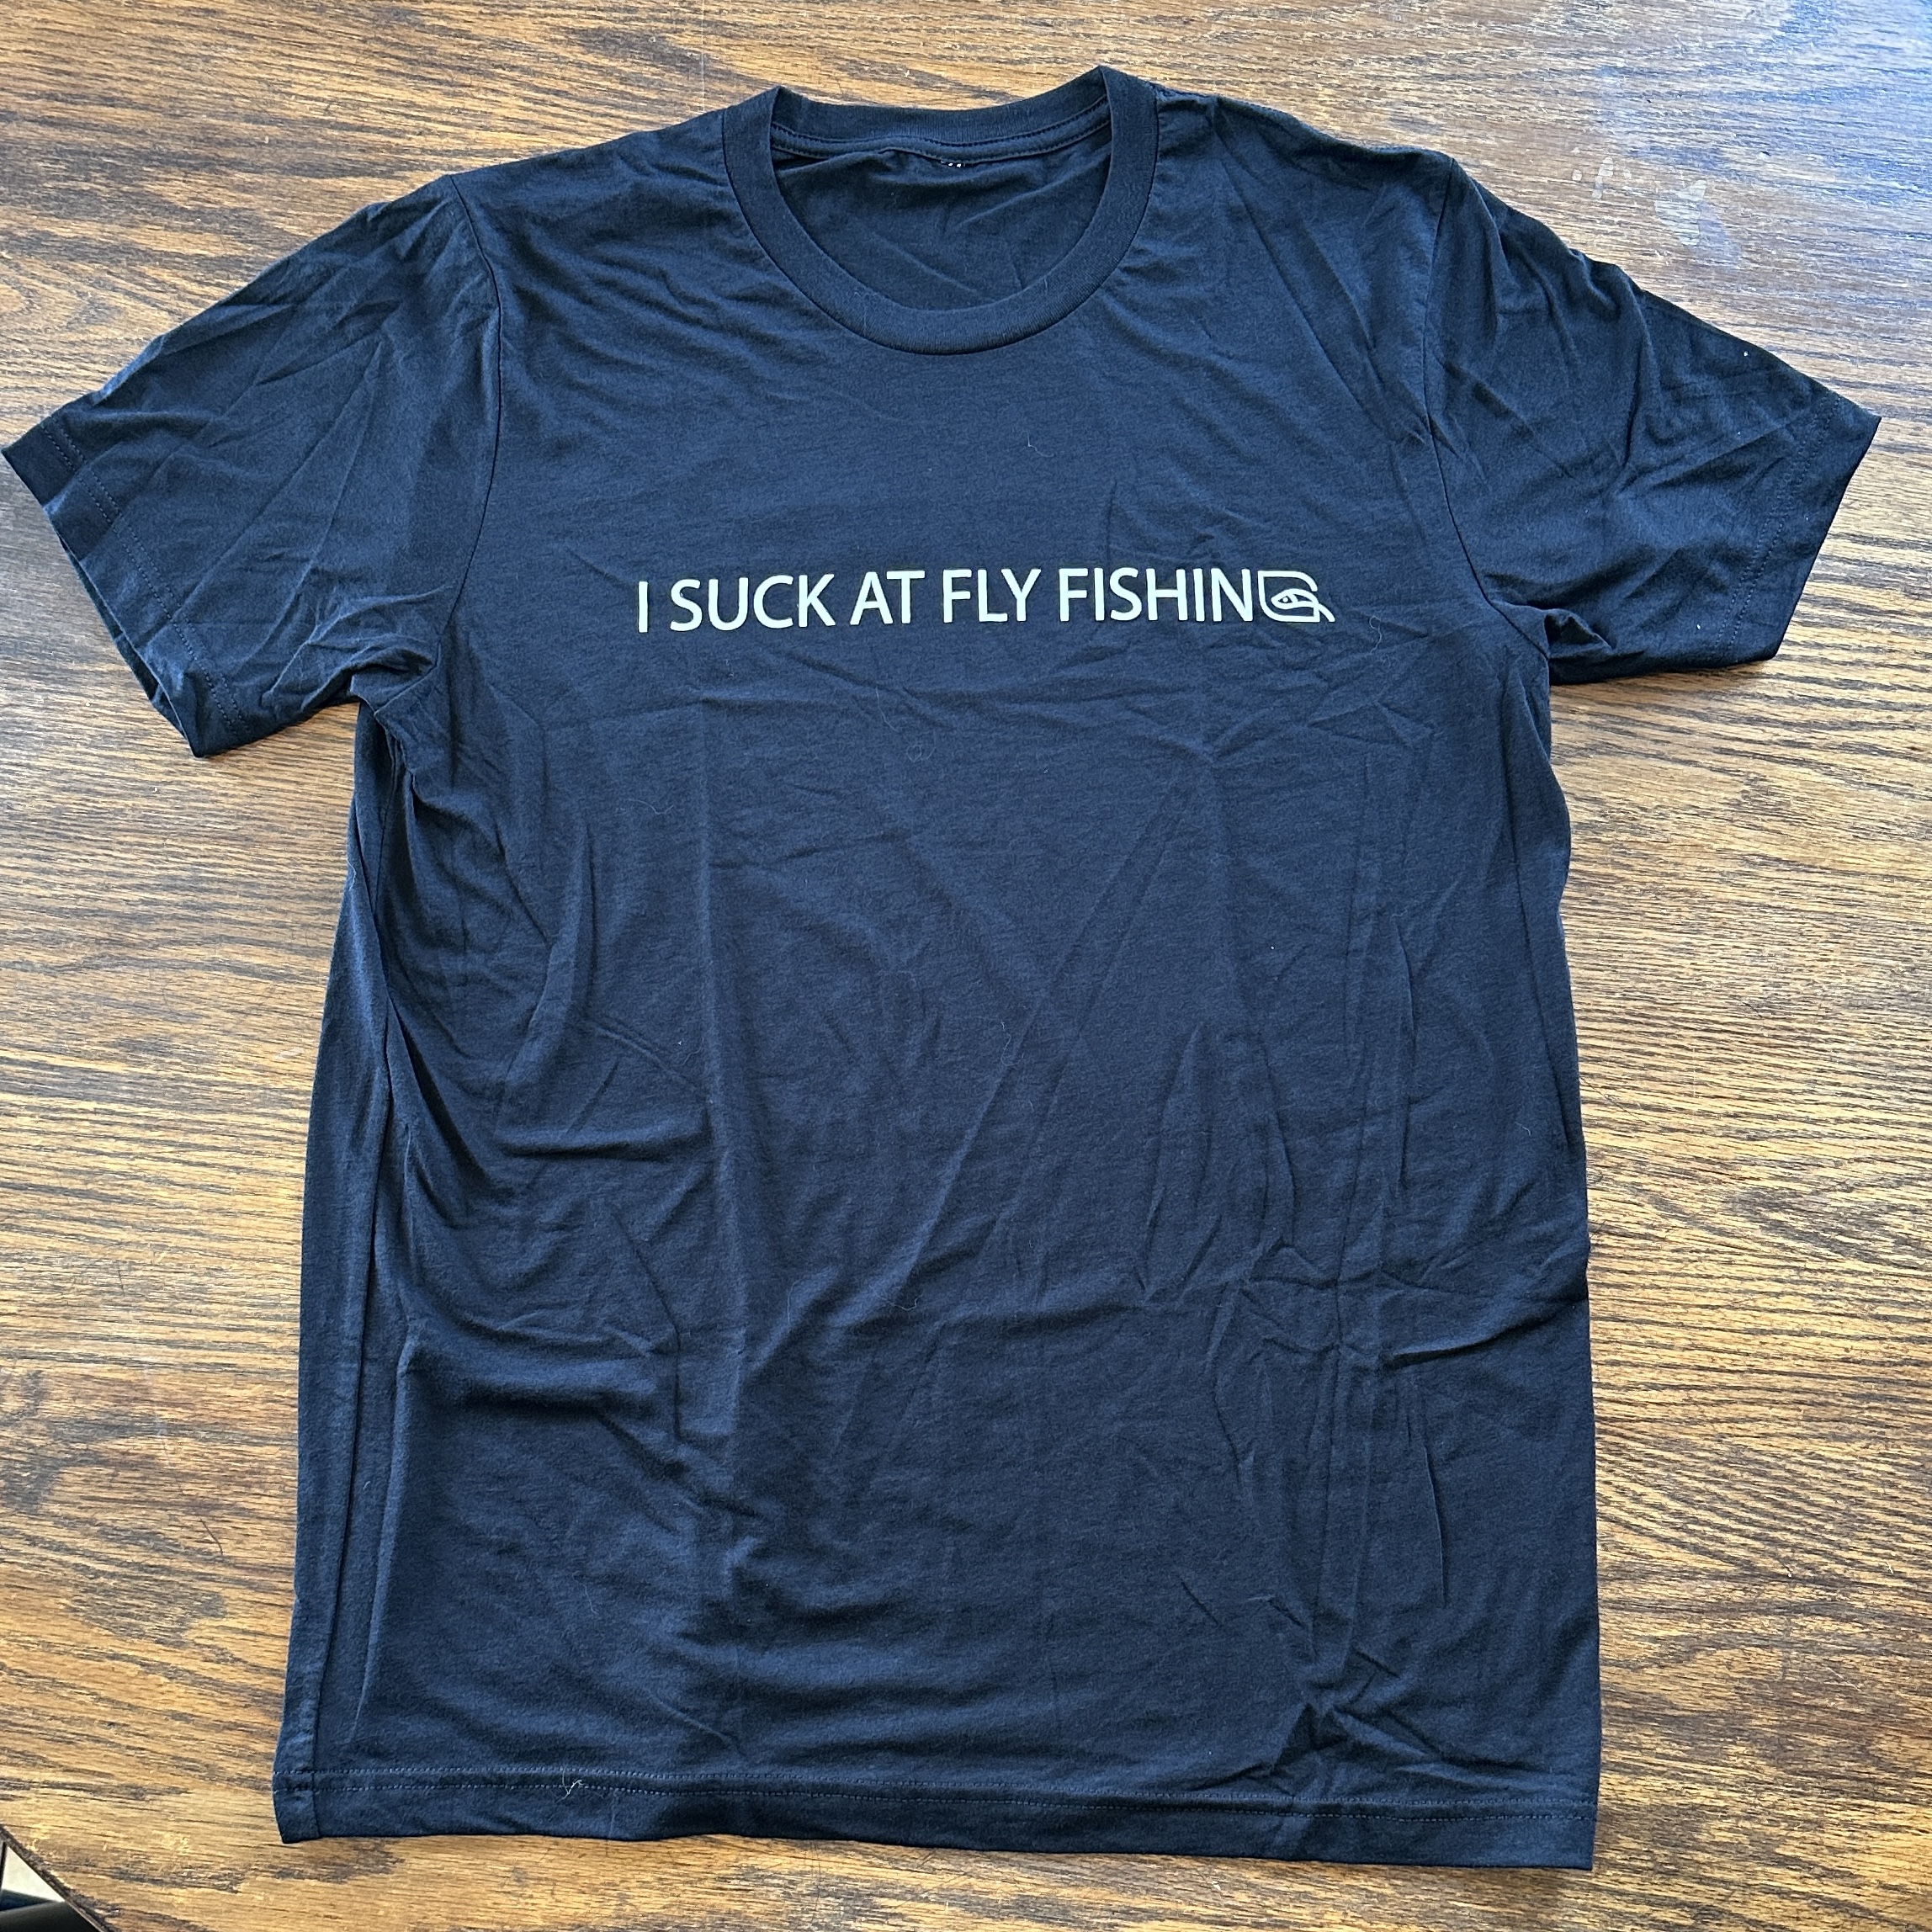 I SUCK tri-blend t-shirt